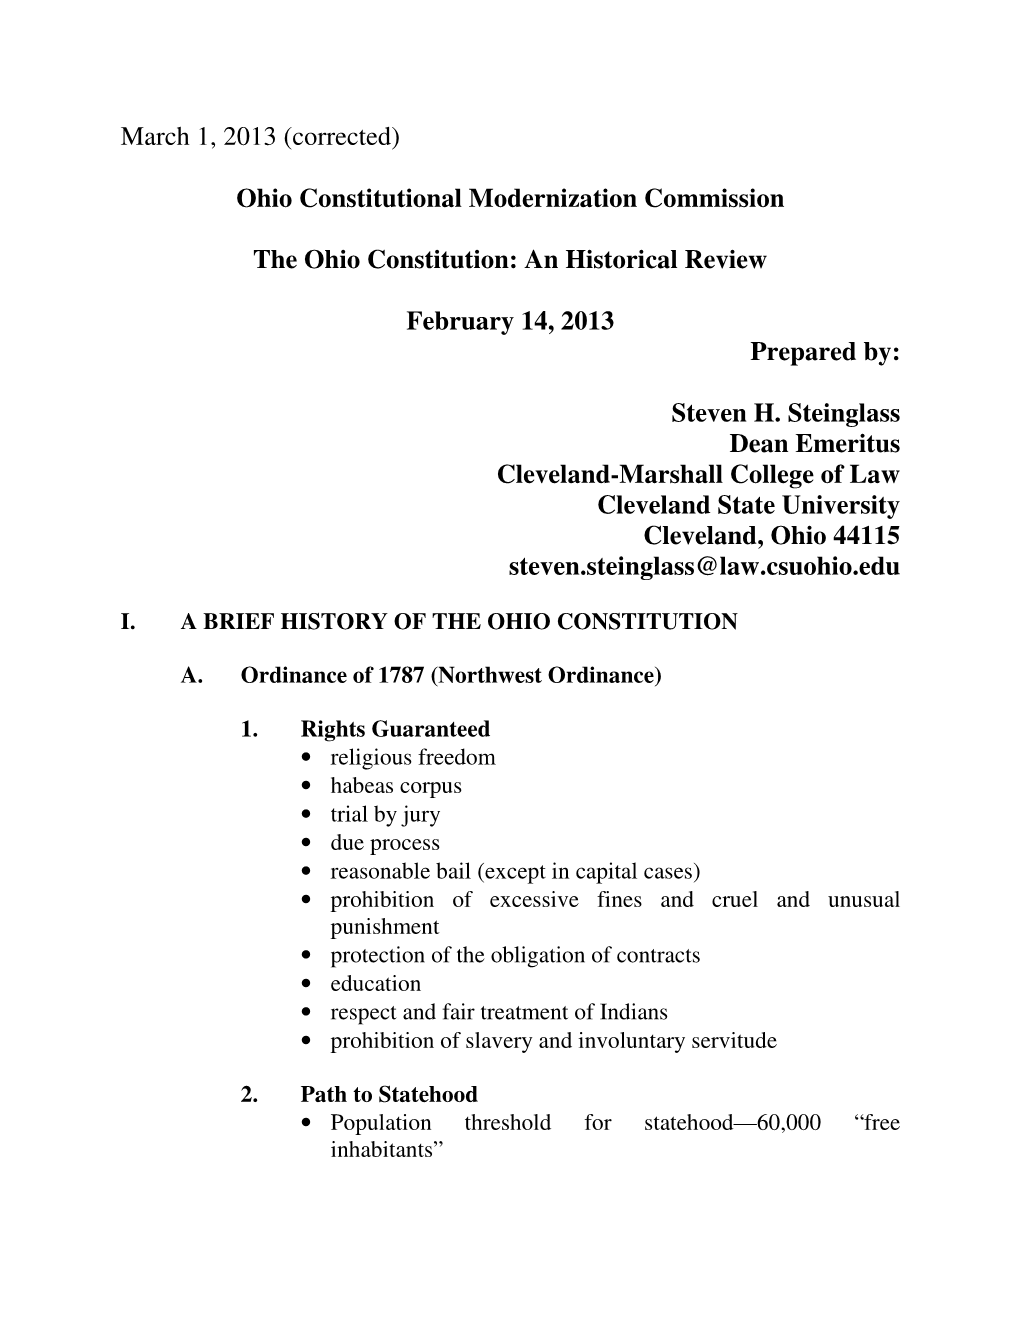 Ohio Constitutional Modernization Commission the Ohio